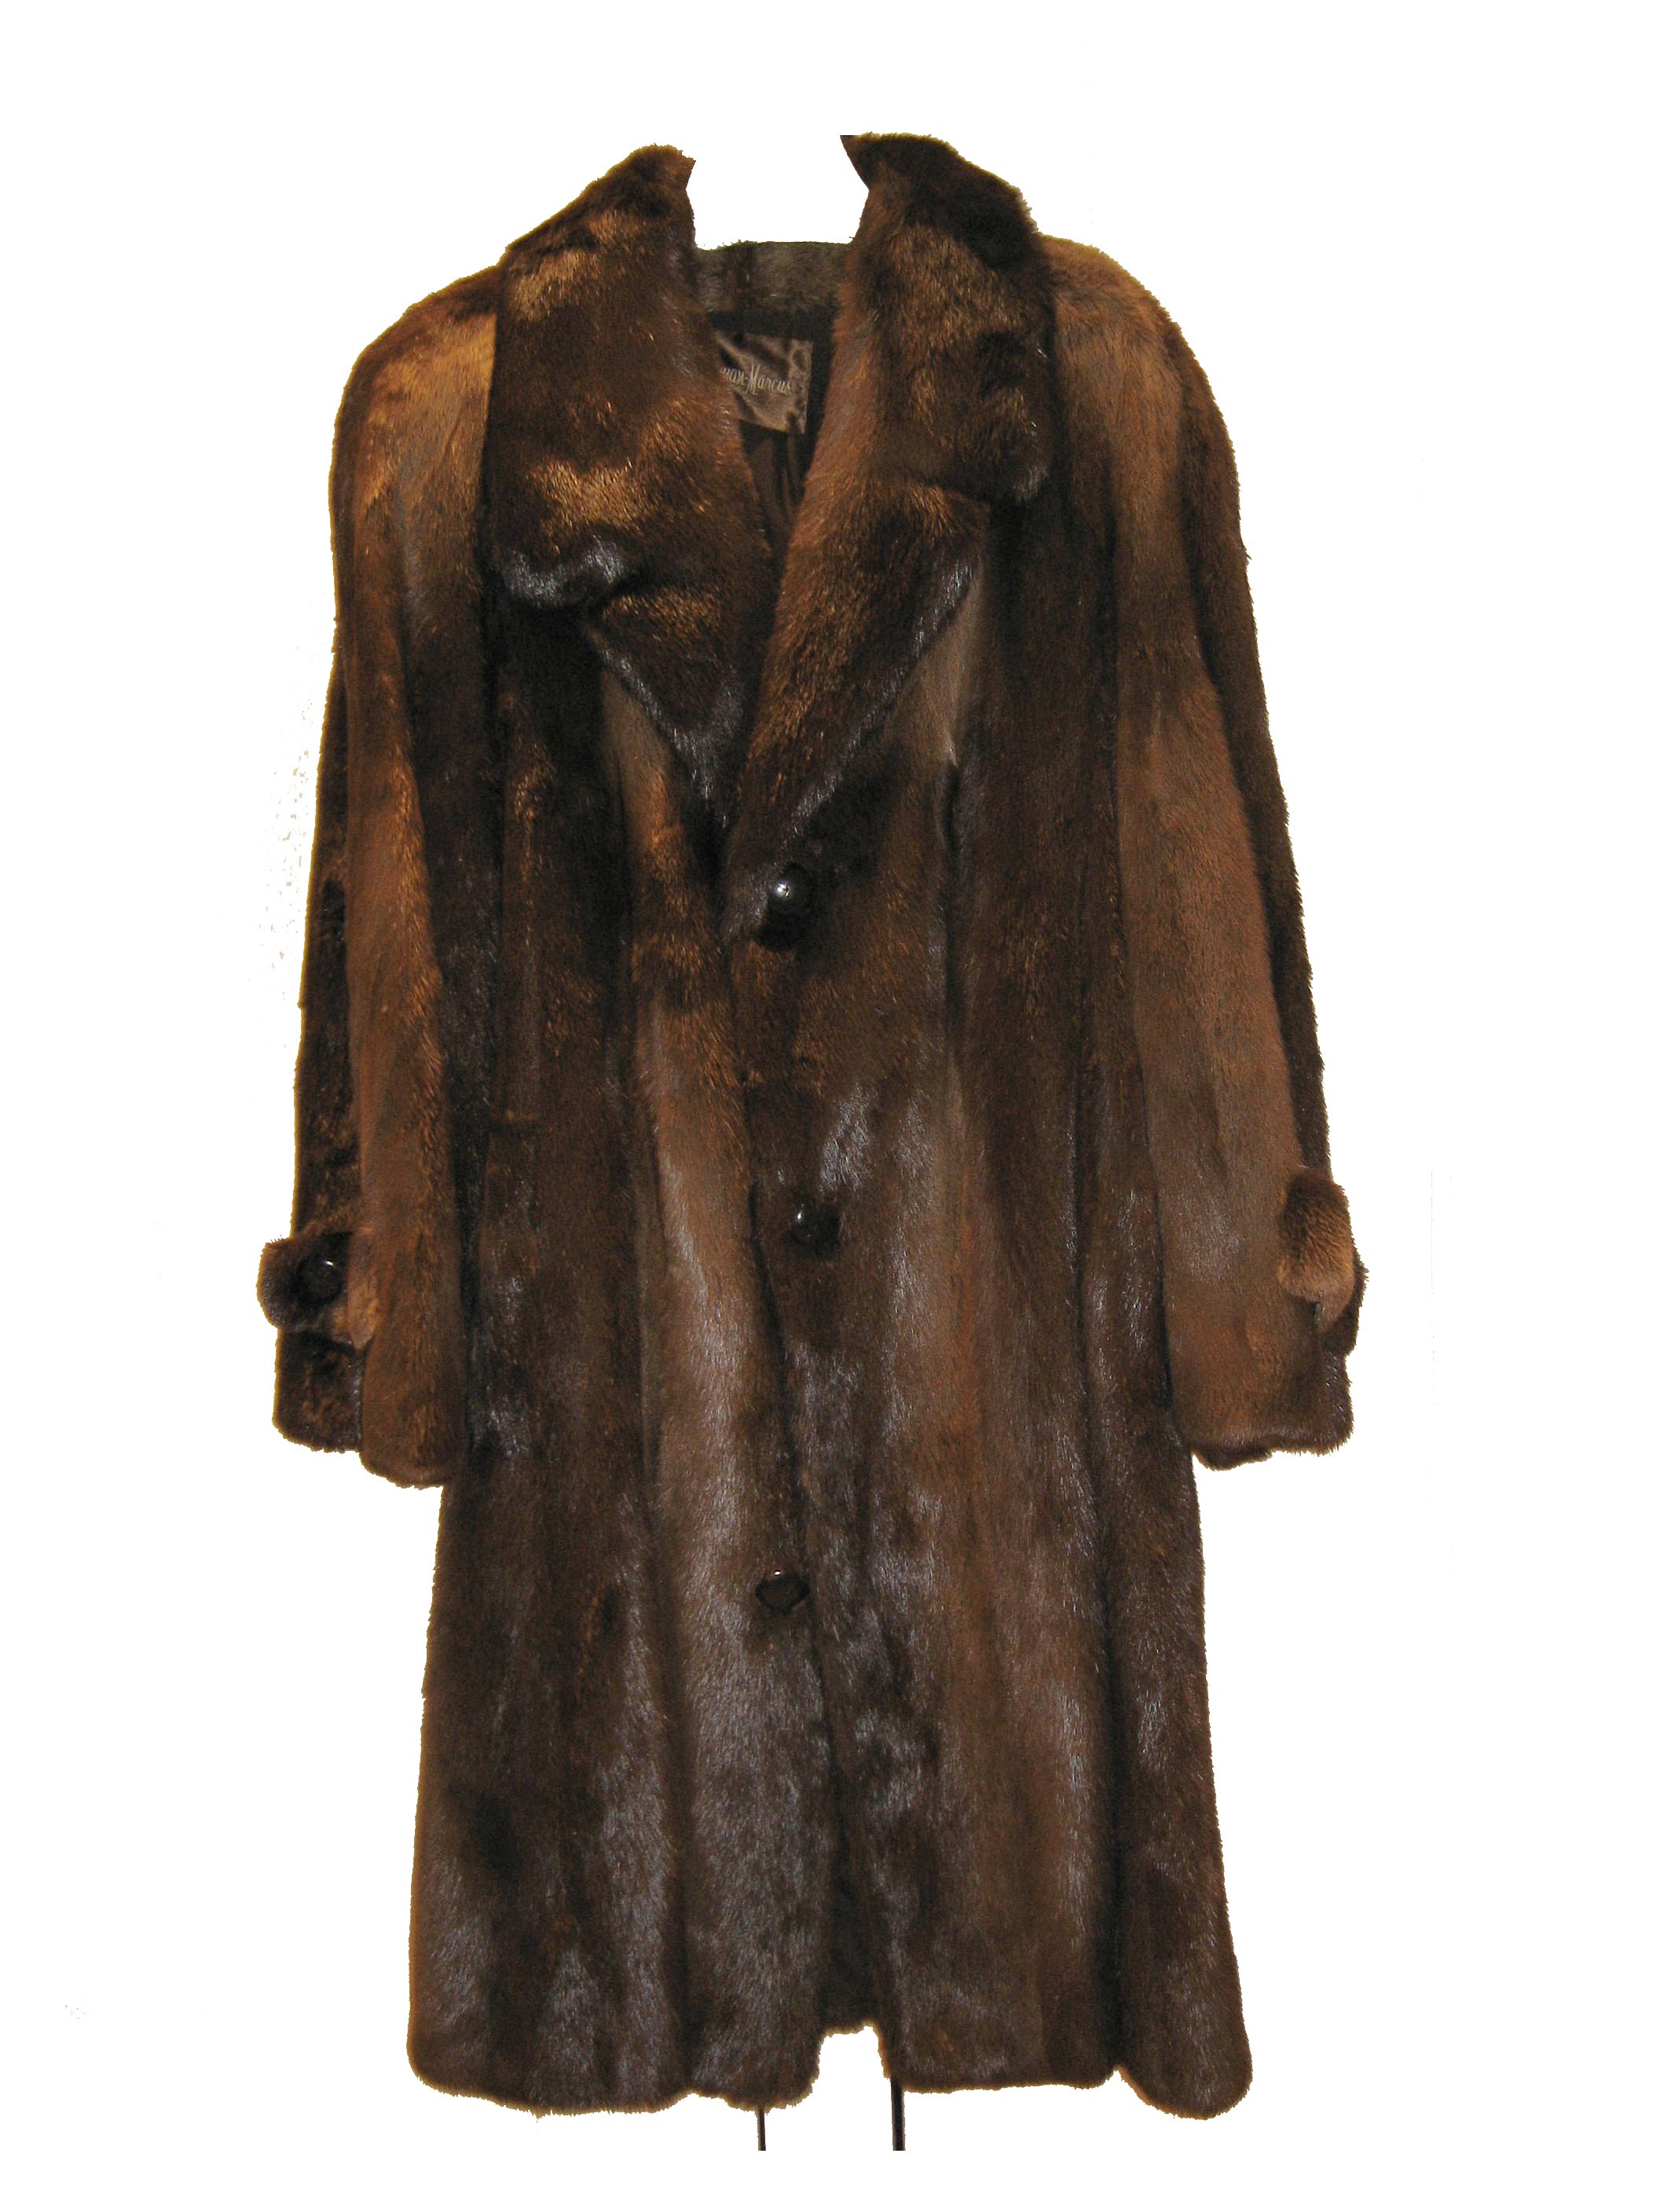 Fuzzy Fun Furs : Neiman Marcus Full-Length Brown Beaver Men's Coat